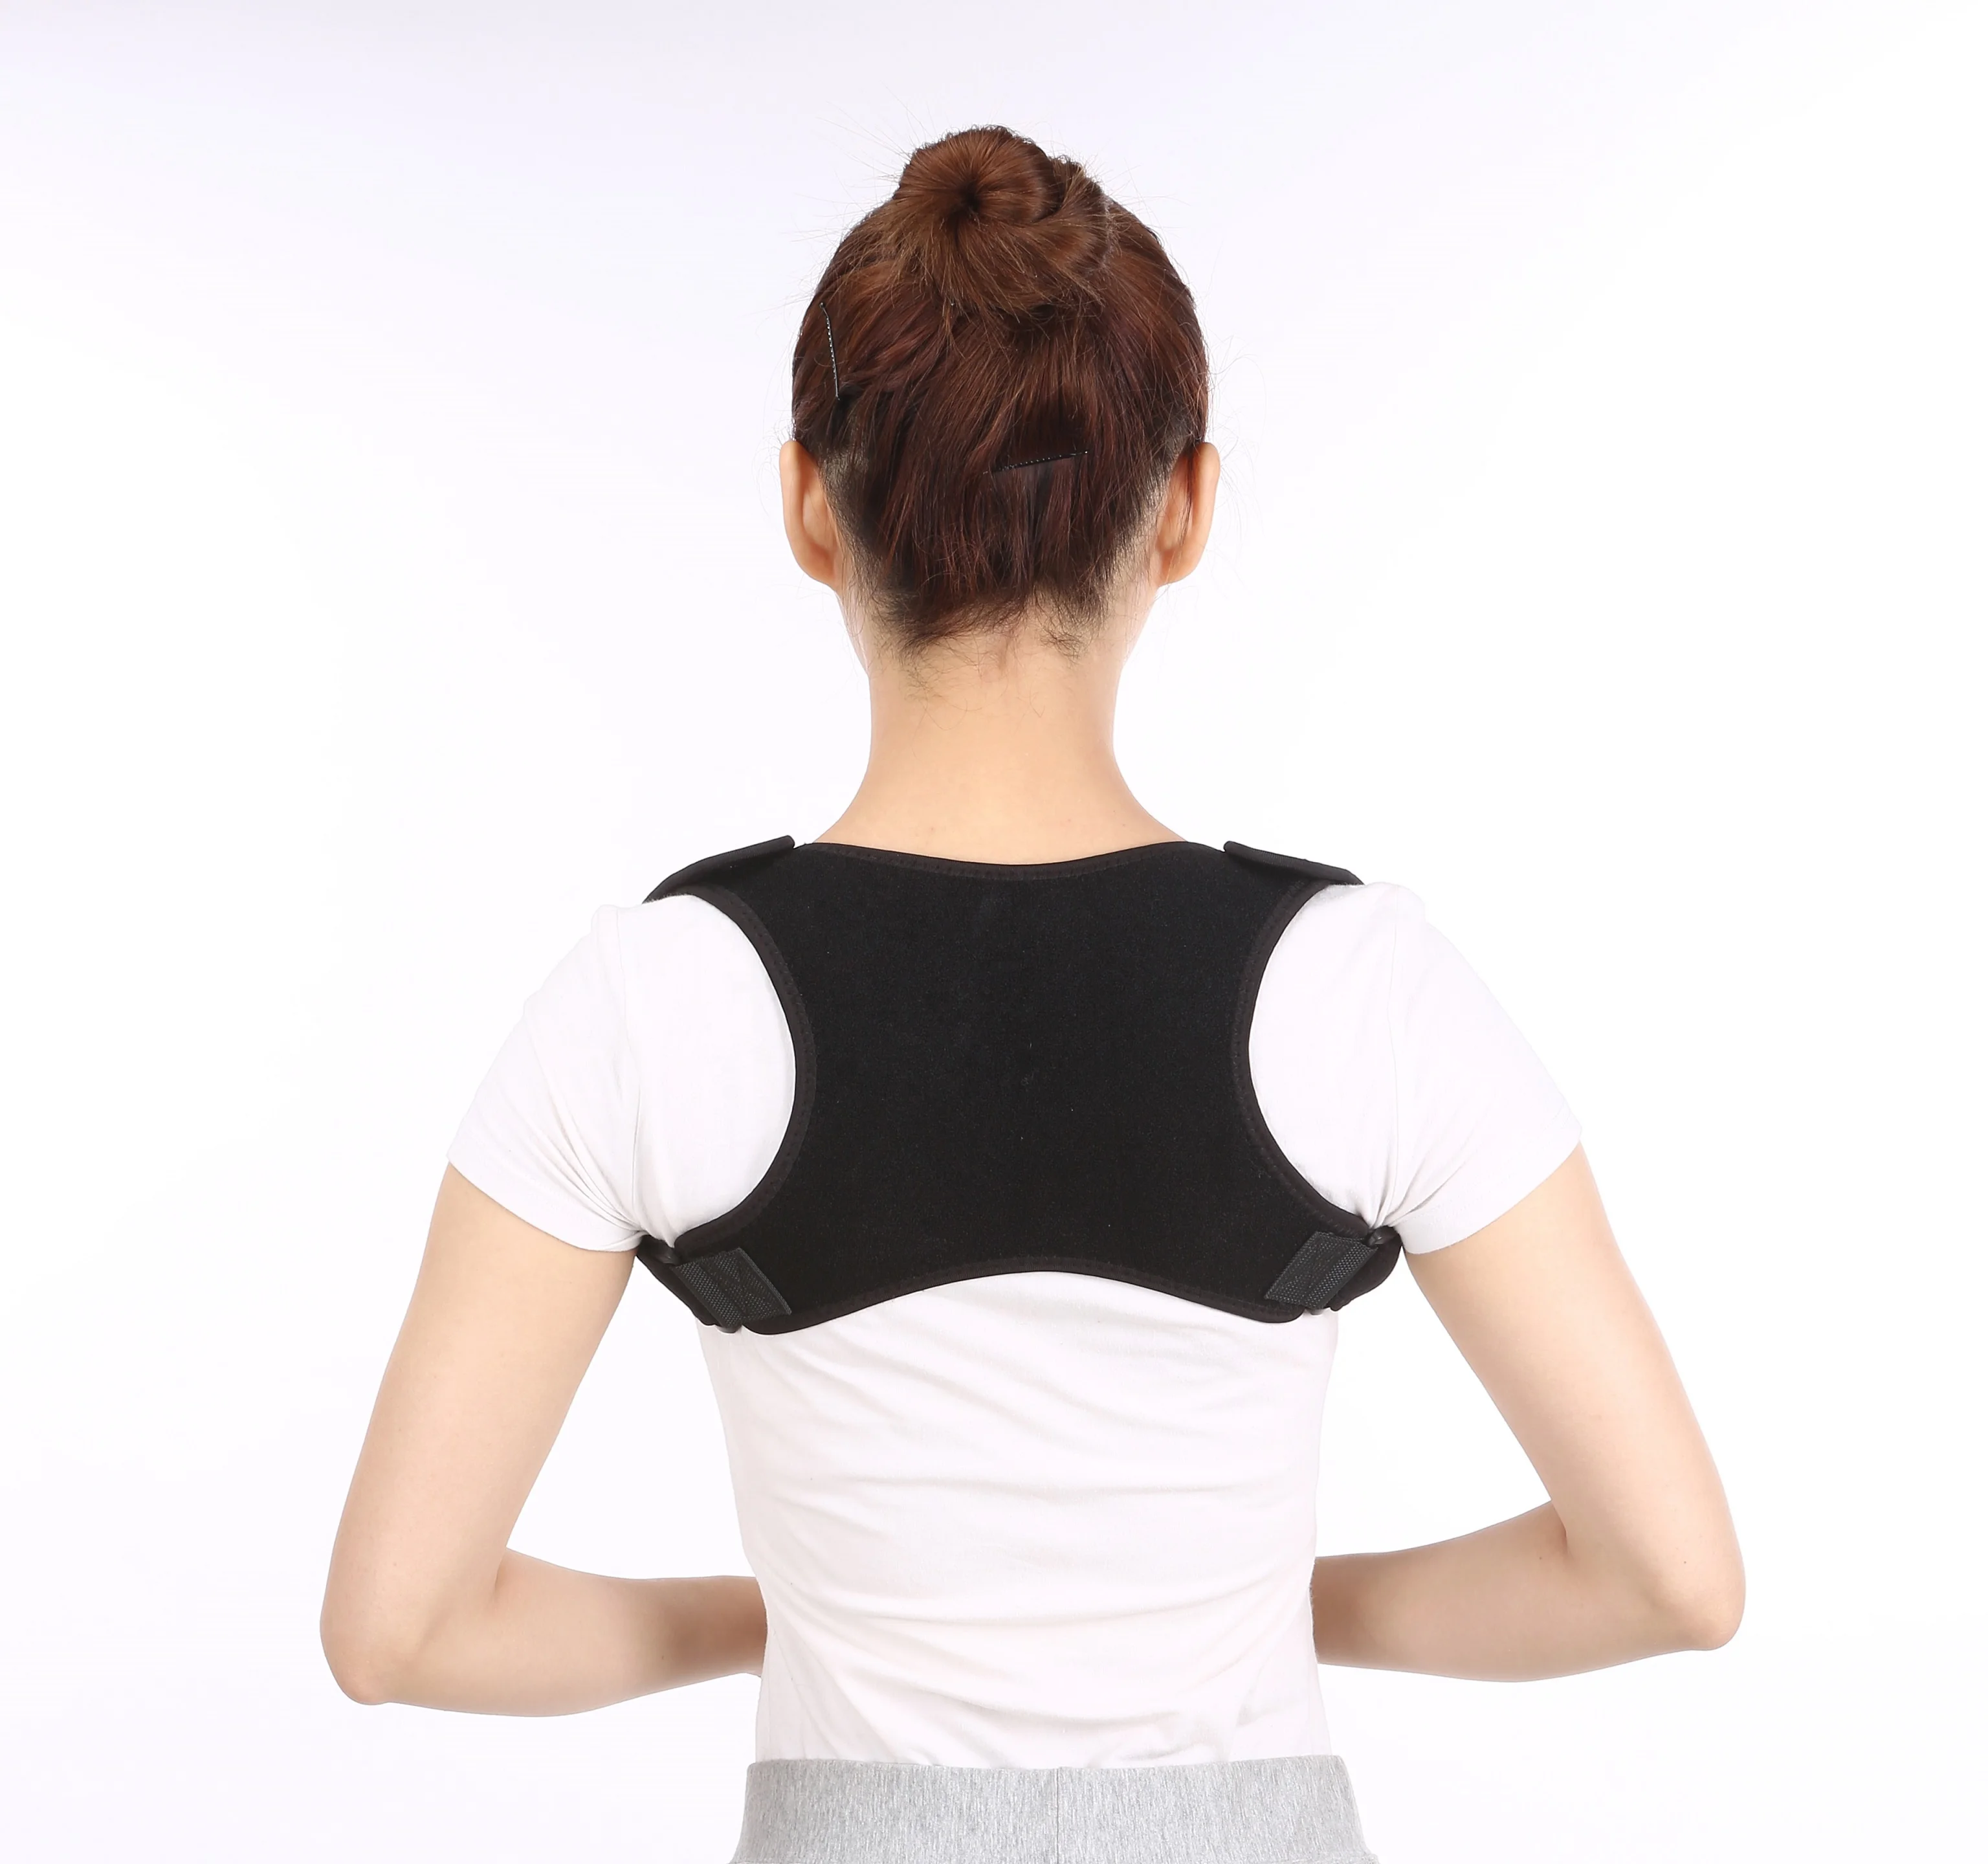 

Posture Corrector Universal Fit Adjustable Upper Back Brace For Clavicle To Support Neck, Back and Shoulder Pain Relief, Black